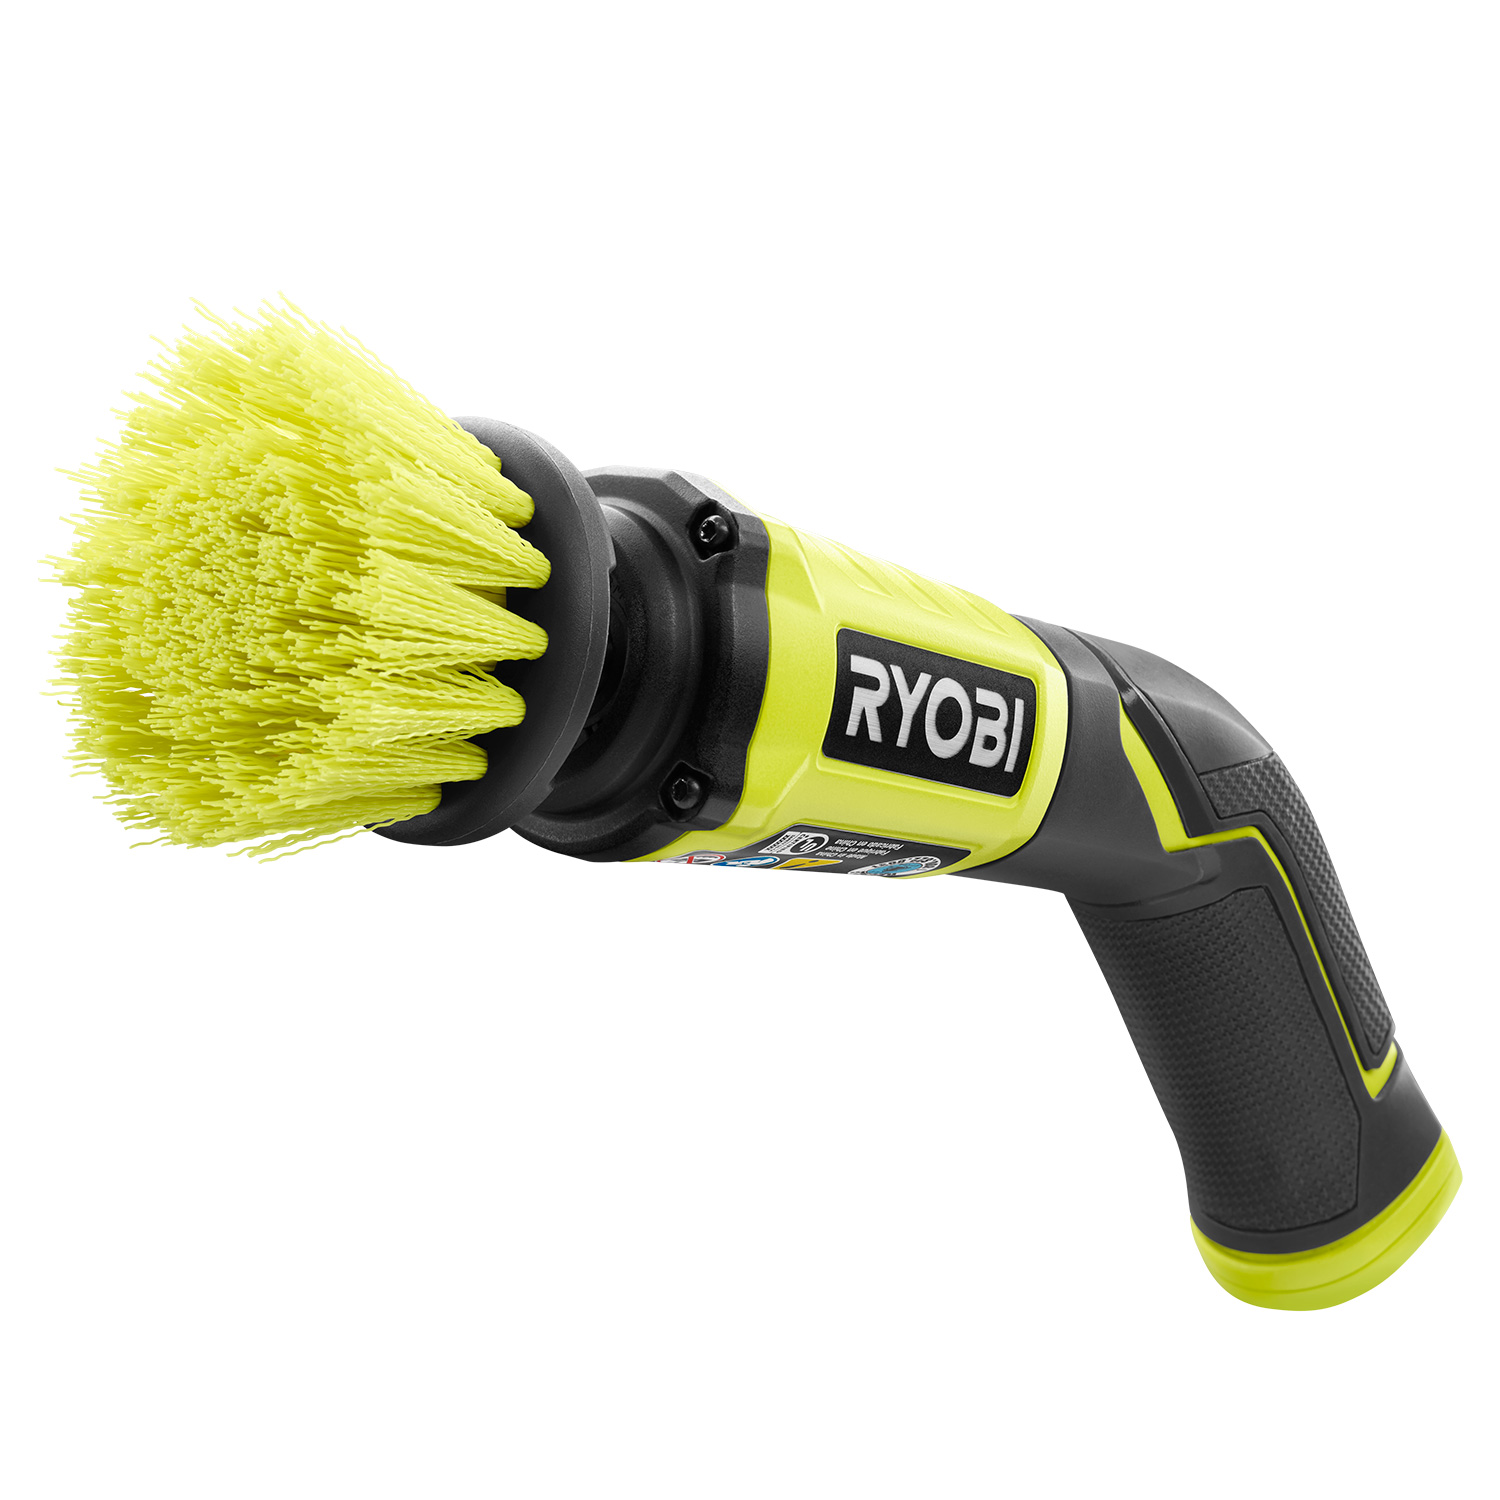 Ryobi Part # A95HBK1 - Ryobi Hard Bristle Brush Cleaning Kit (2